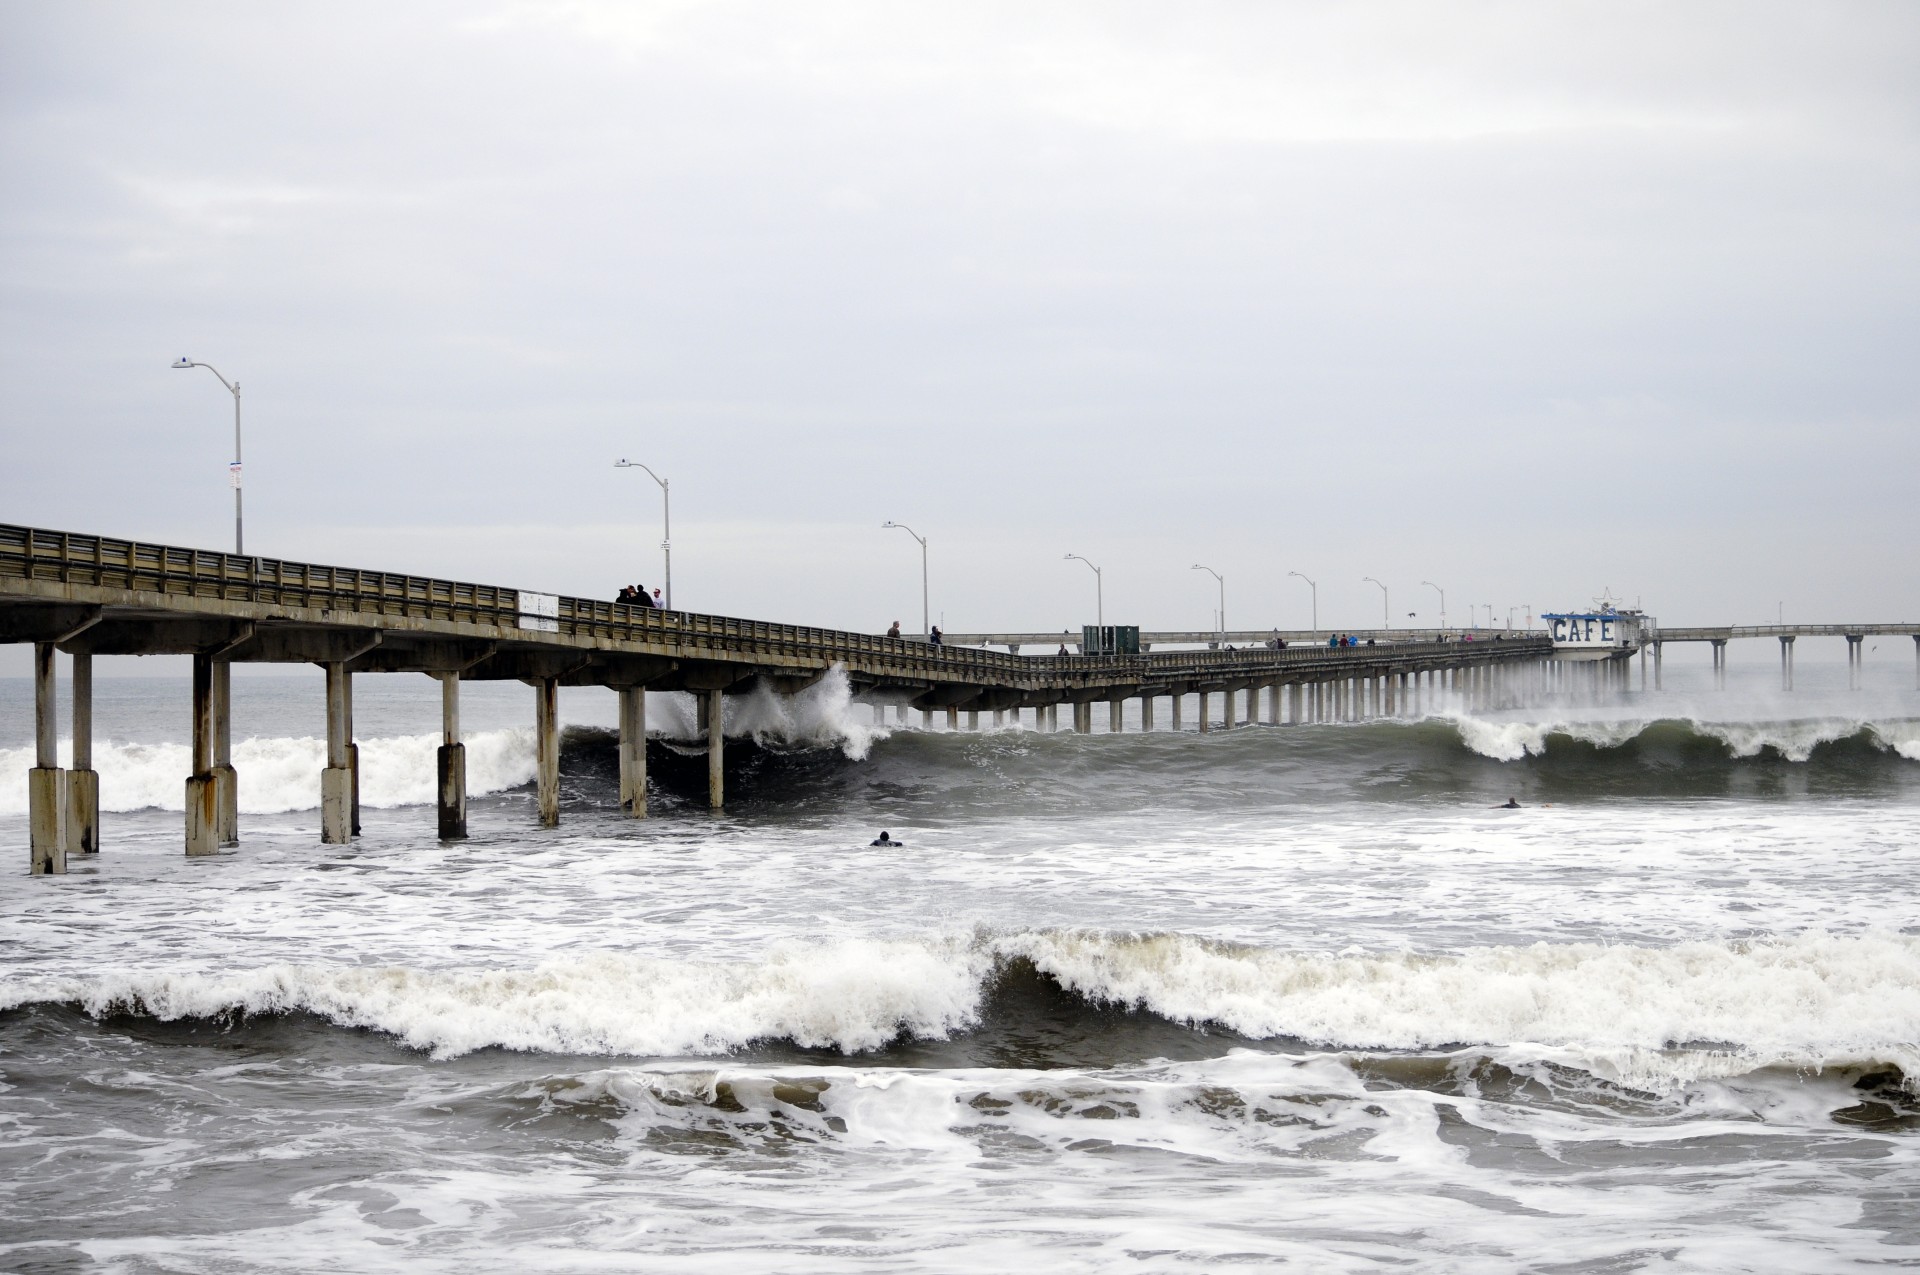 Large waves crash the pillars of the Long Beach Pier